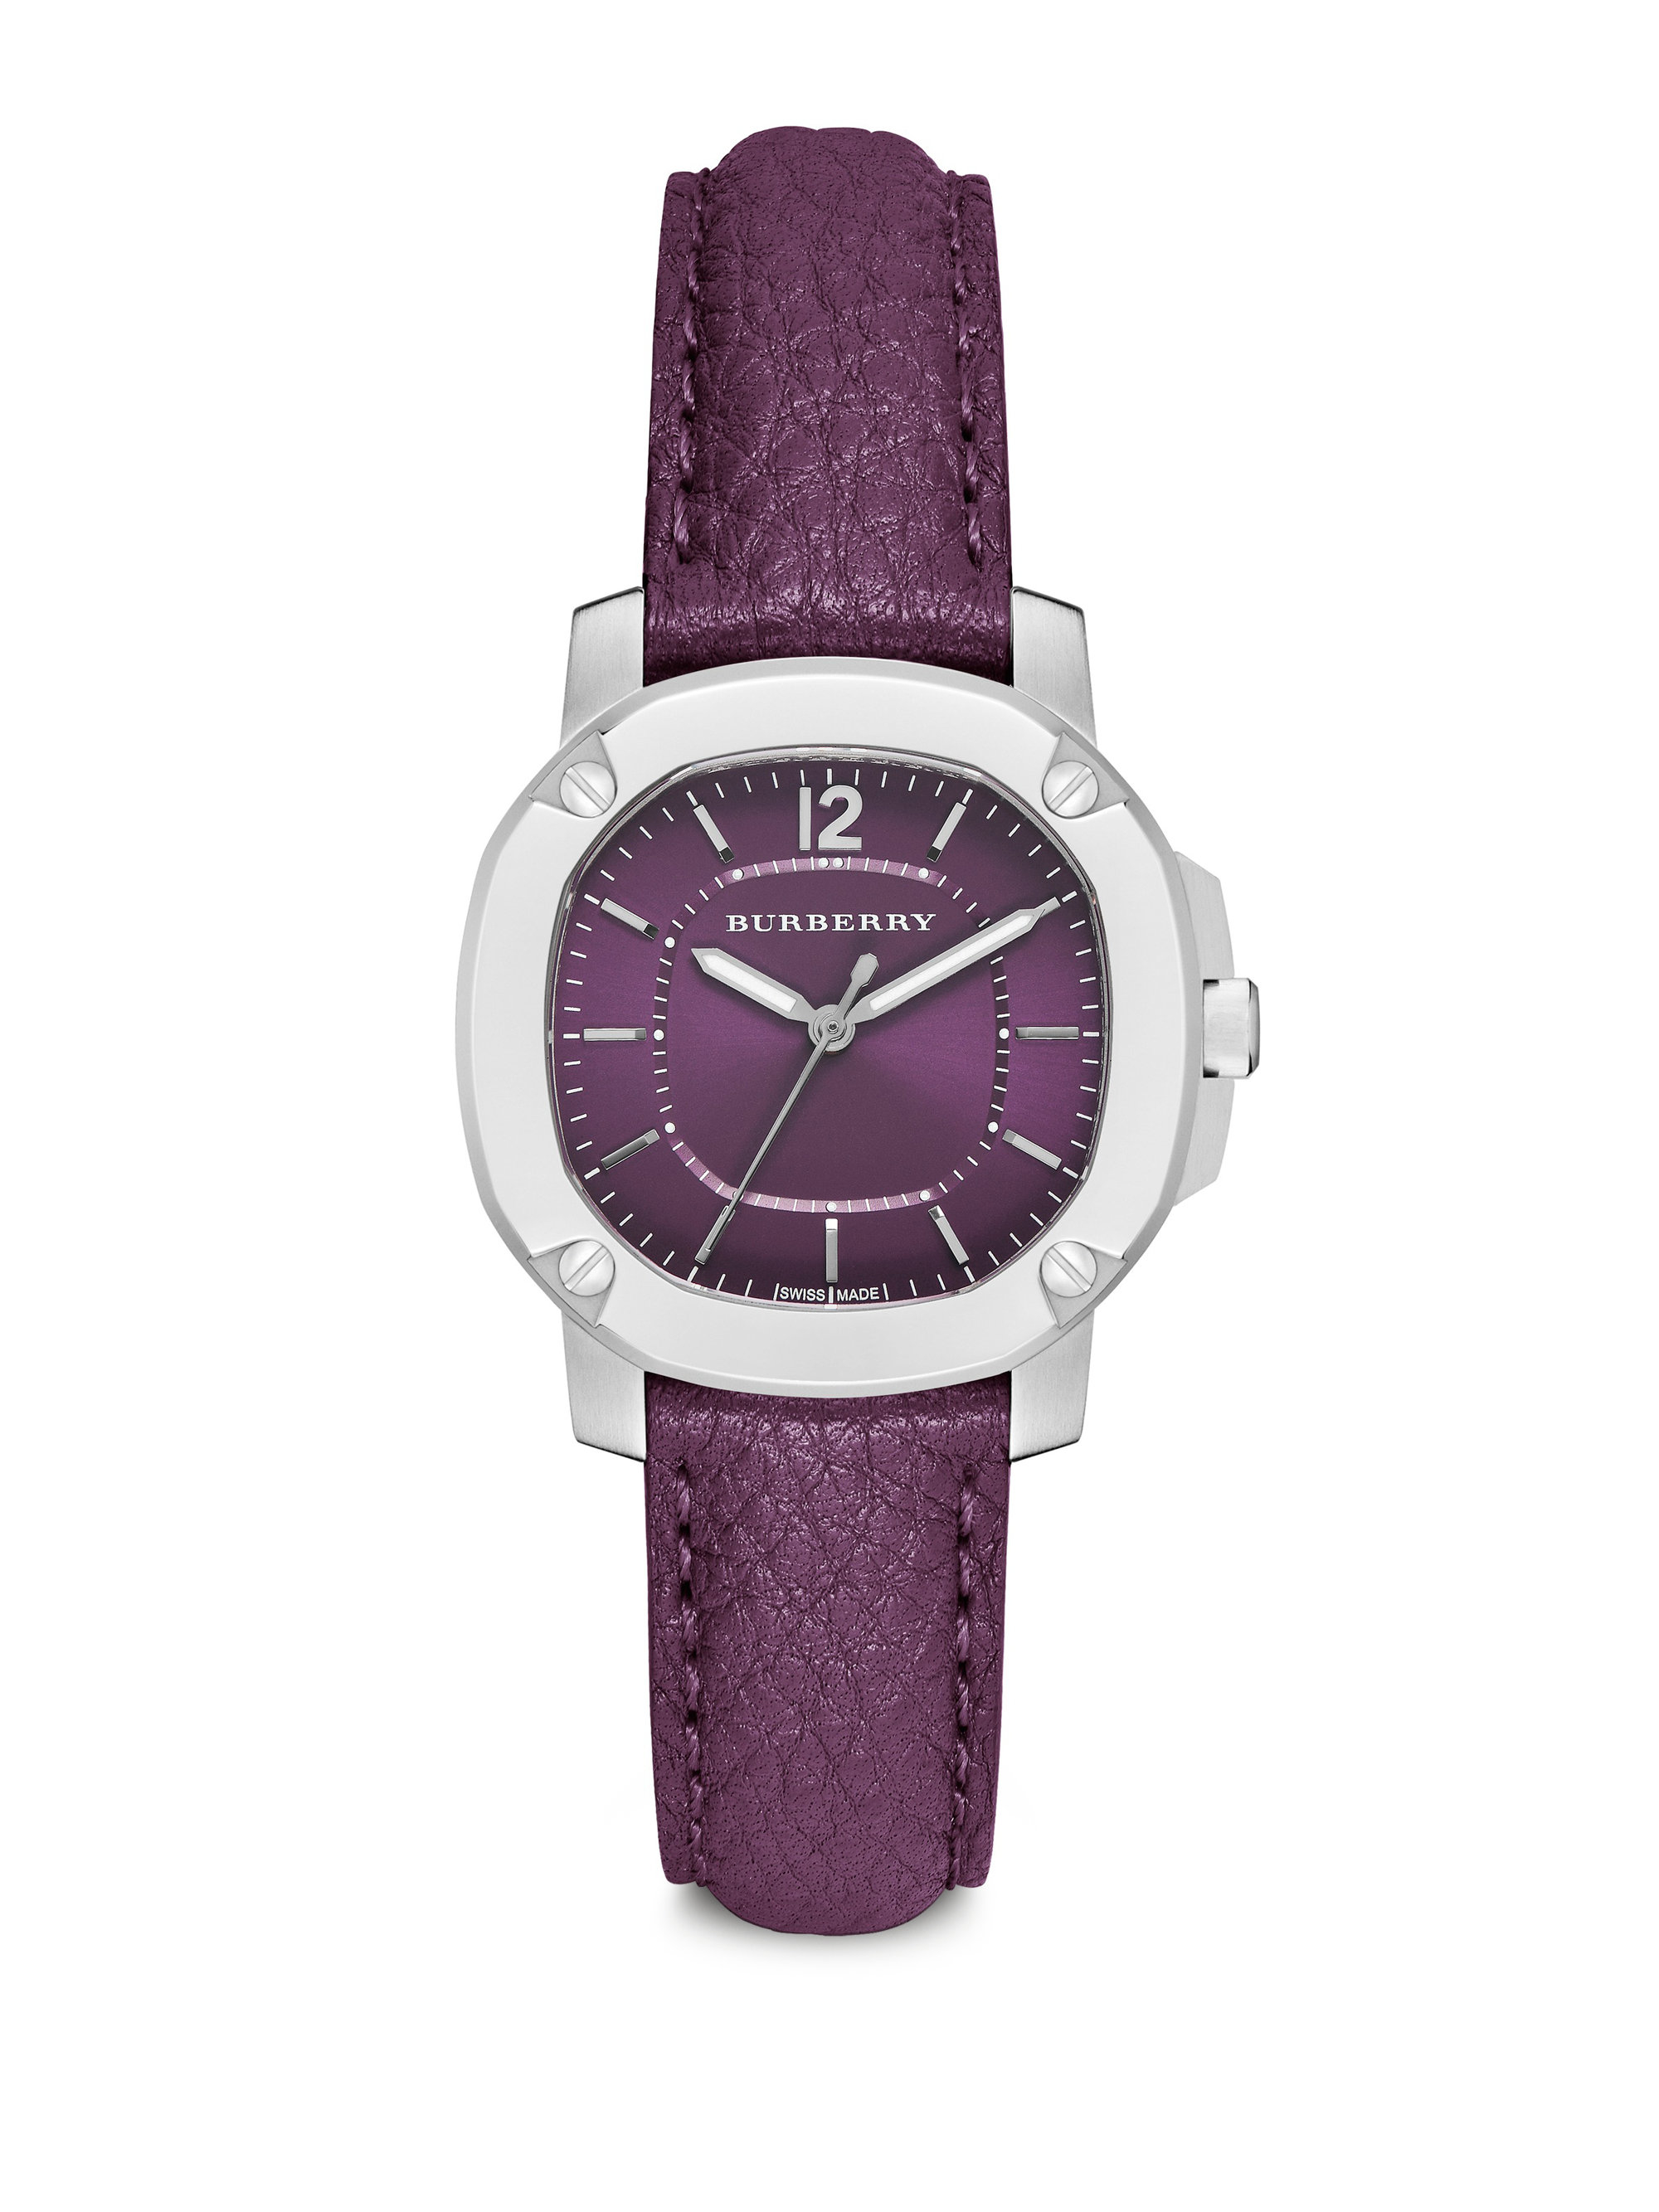 burberry watch purple